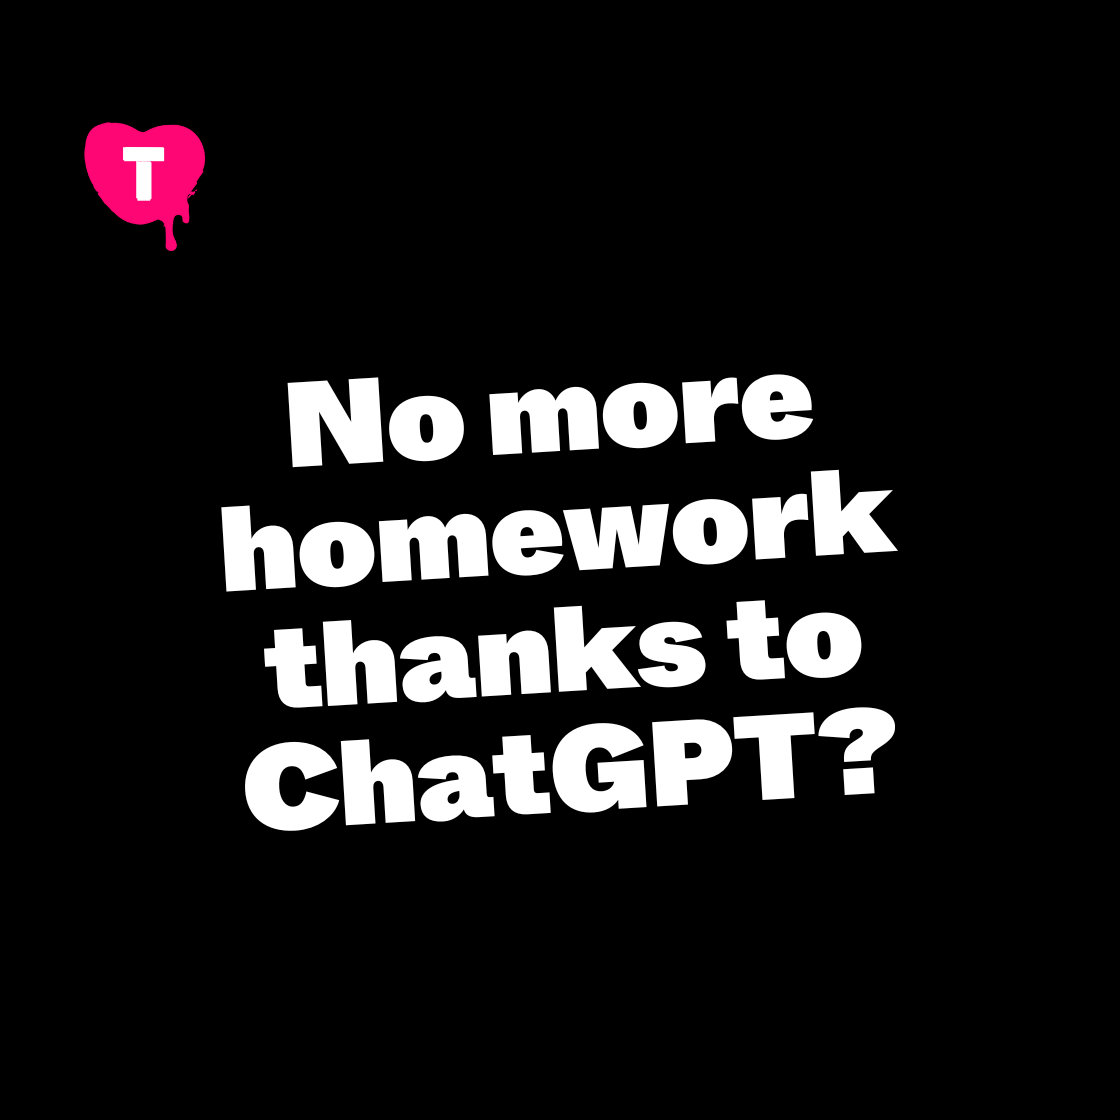 No more homework thanks to ChatGPT?